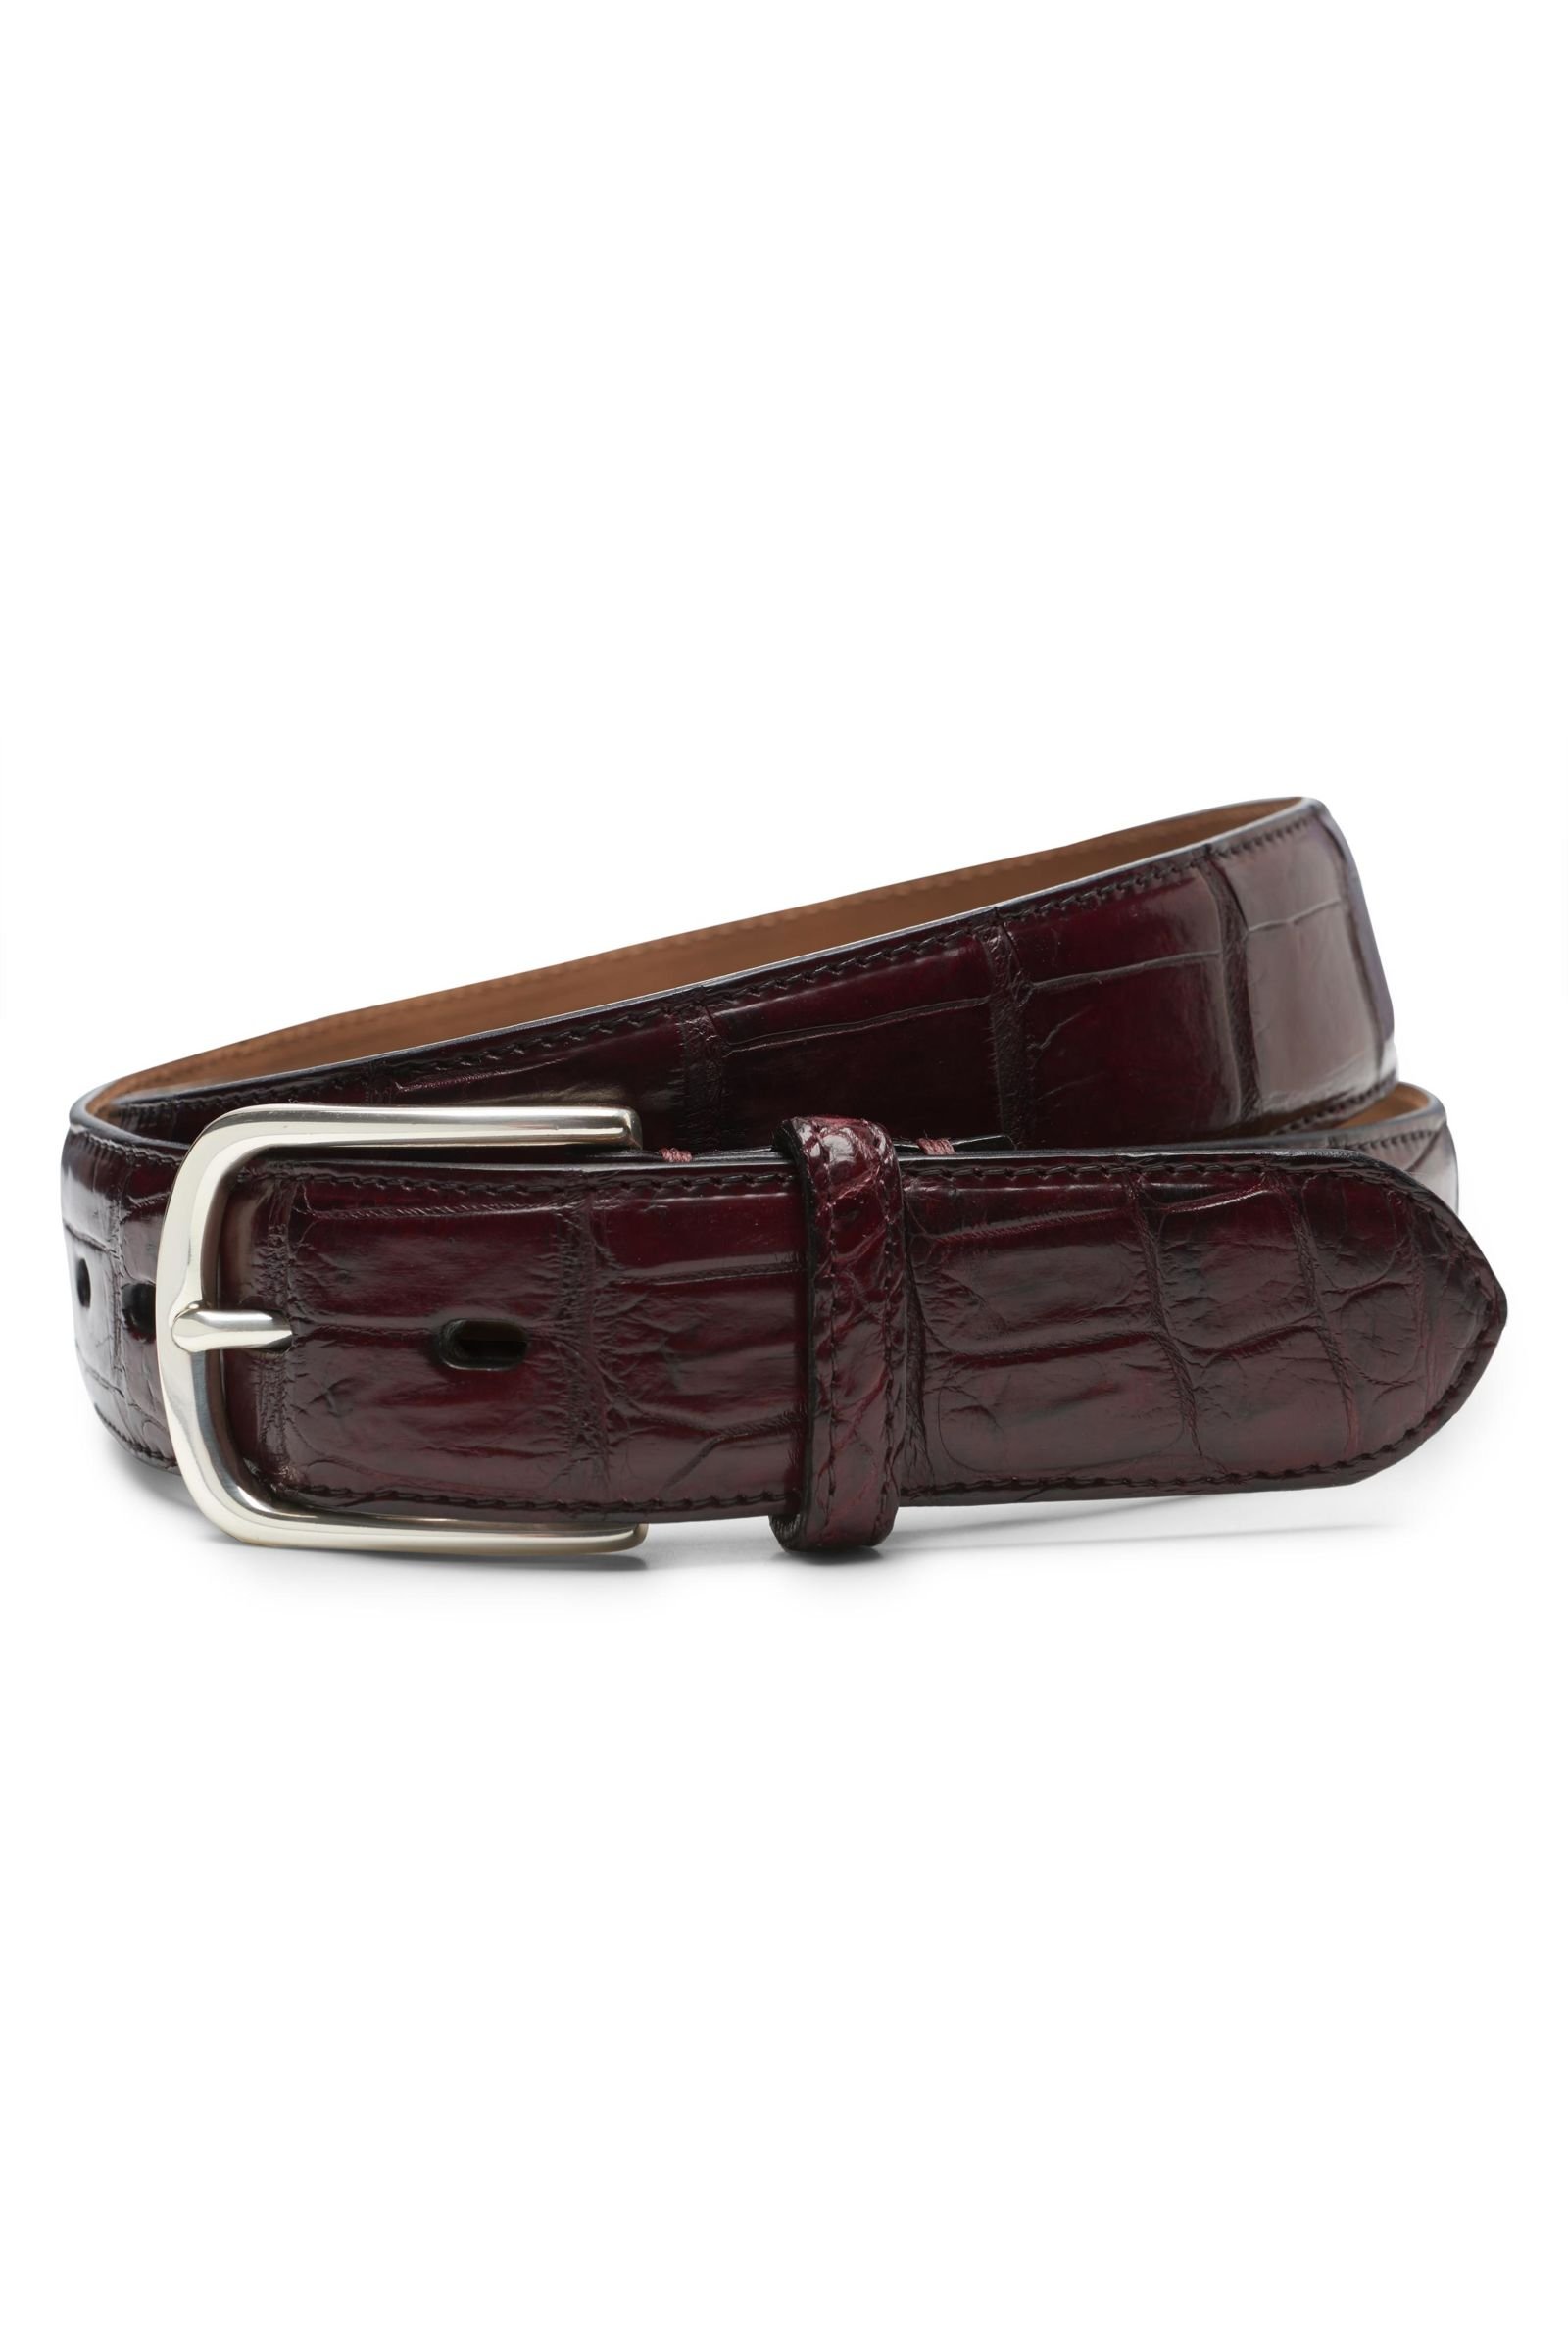 Alligator leather belt burgundy